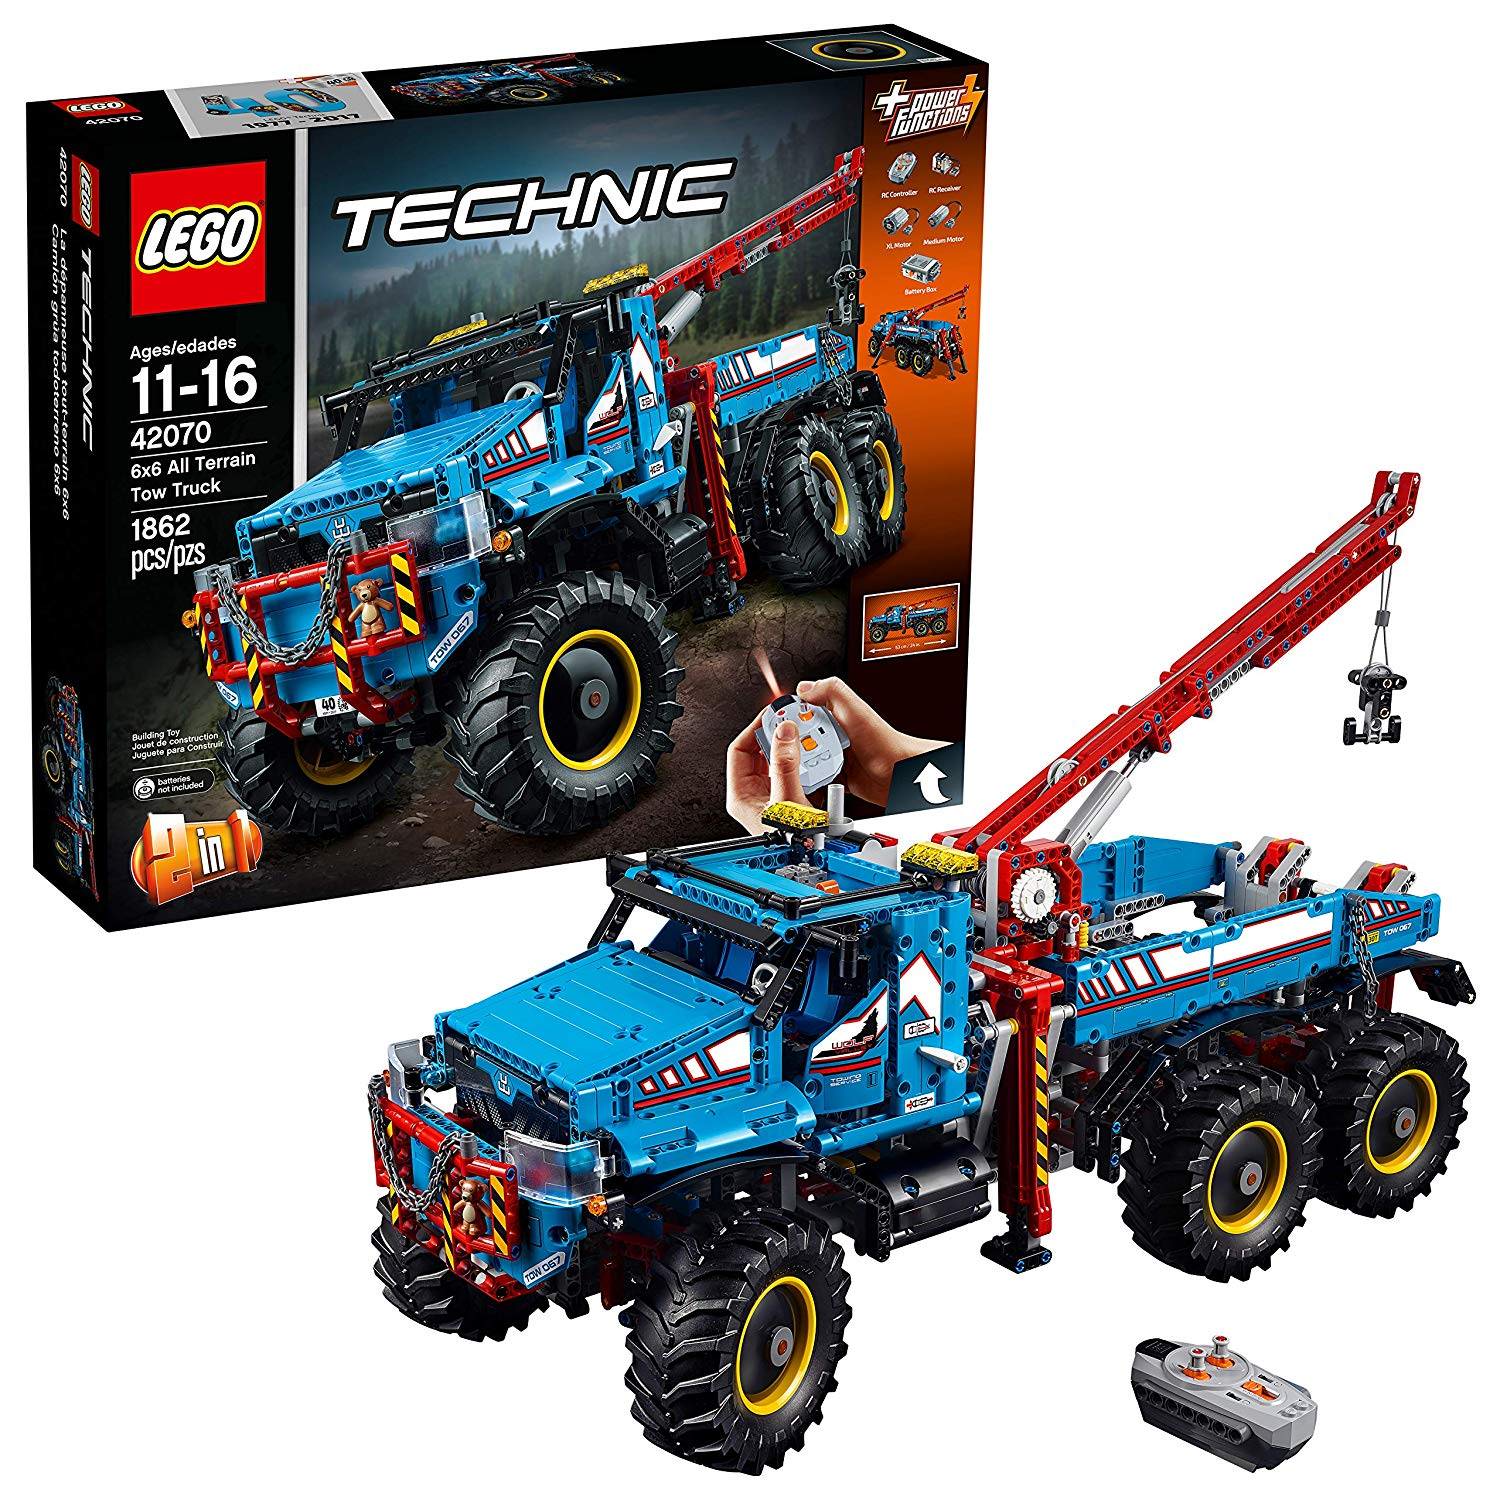 LEGO 42070: 6X6 All Terrain Crane